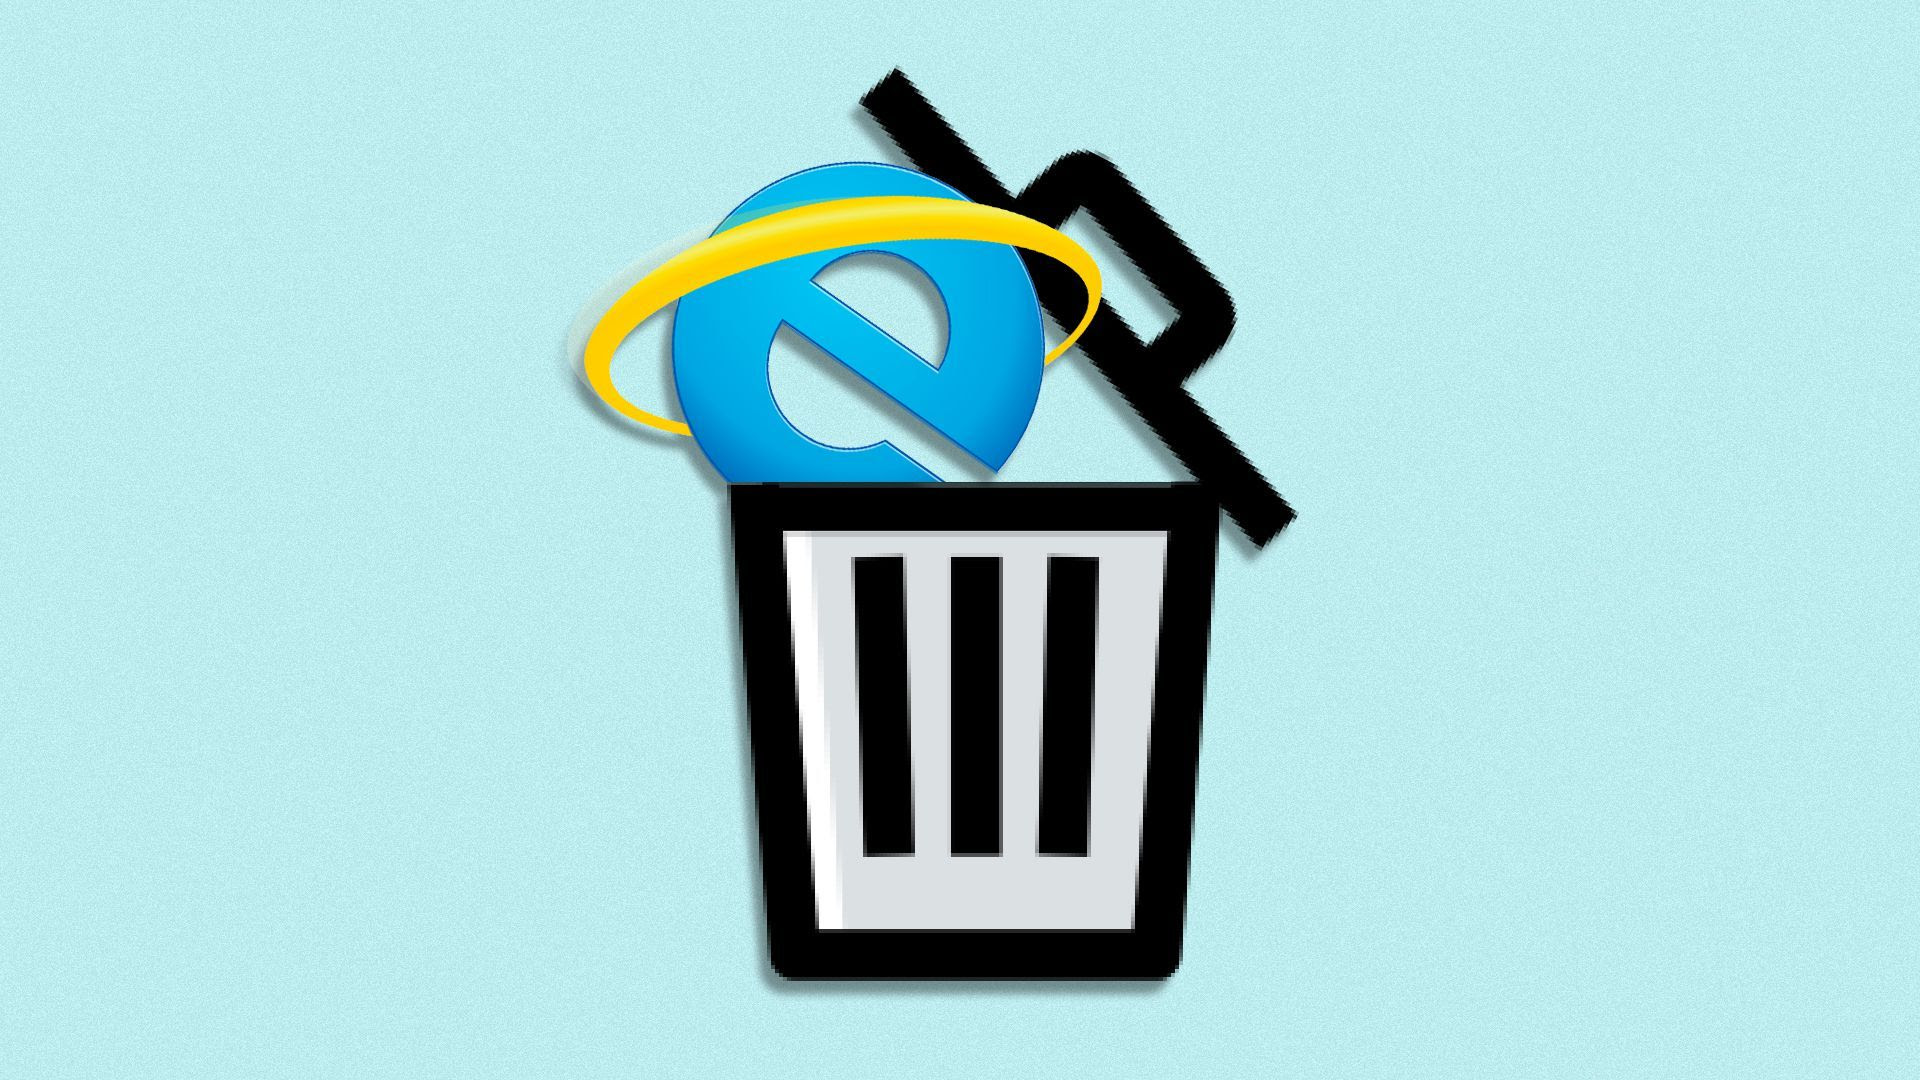 Illustration of the Internet Explorer logo in a trash icon